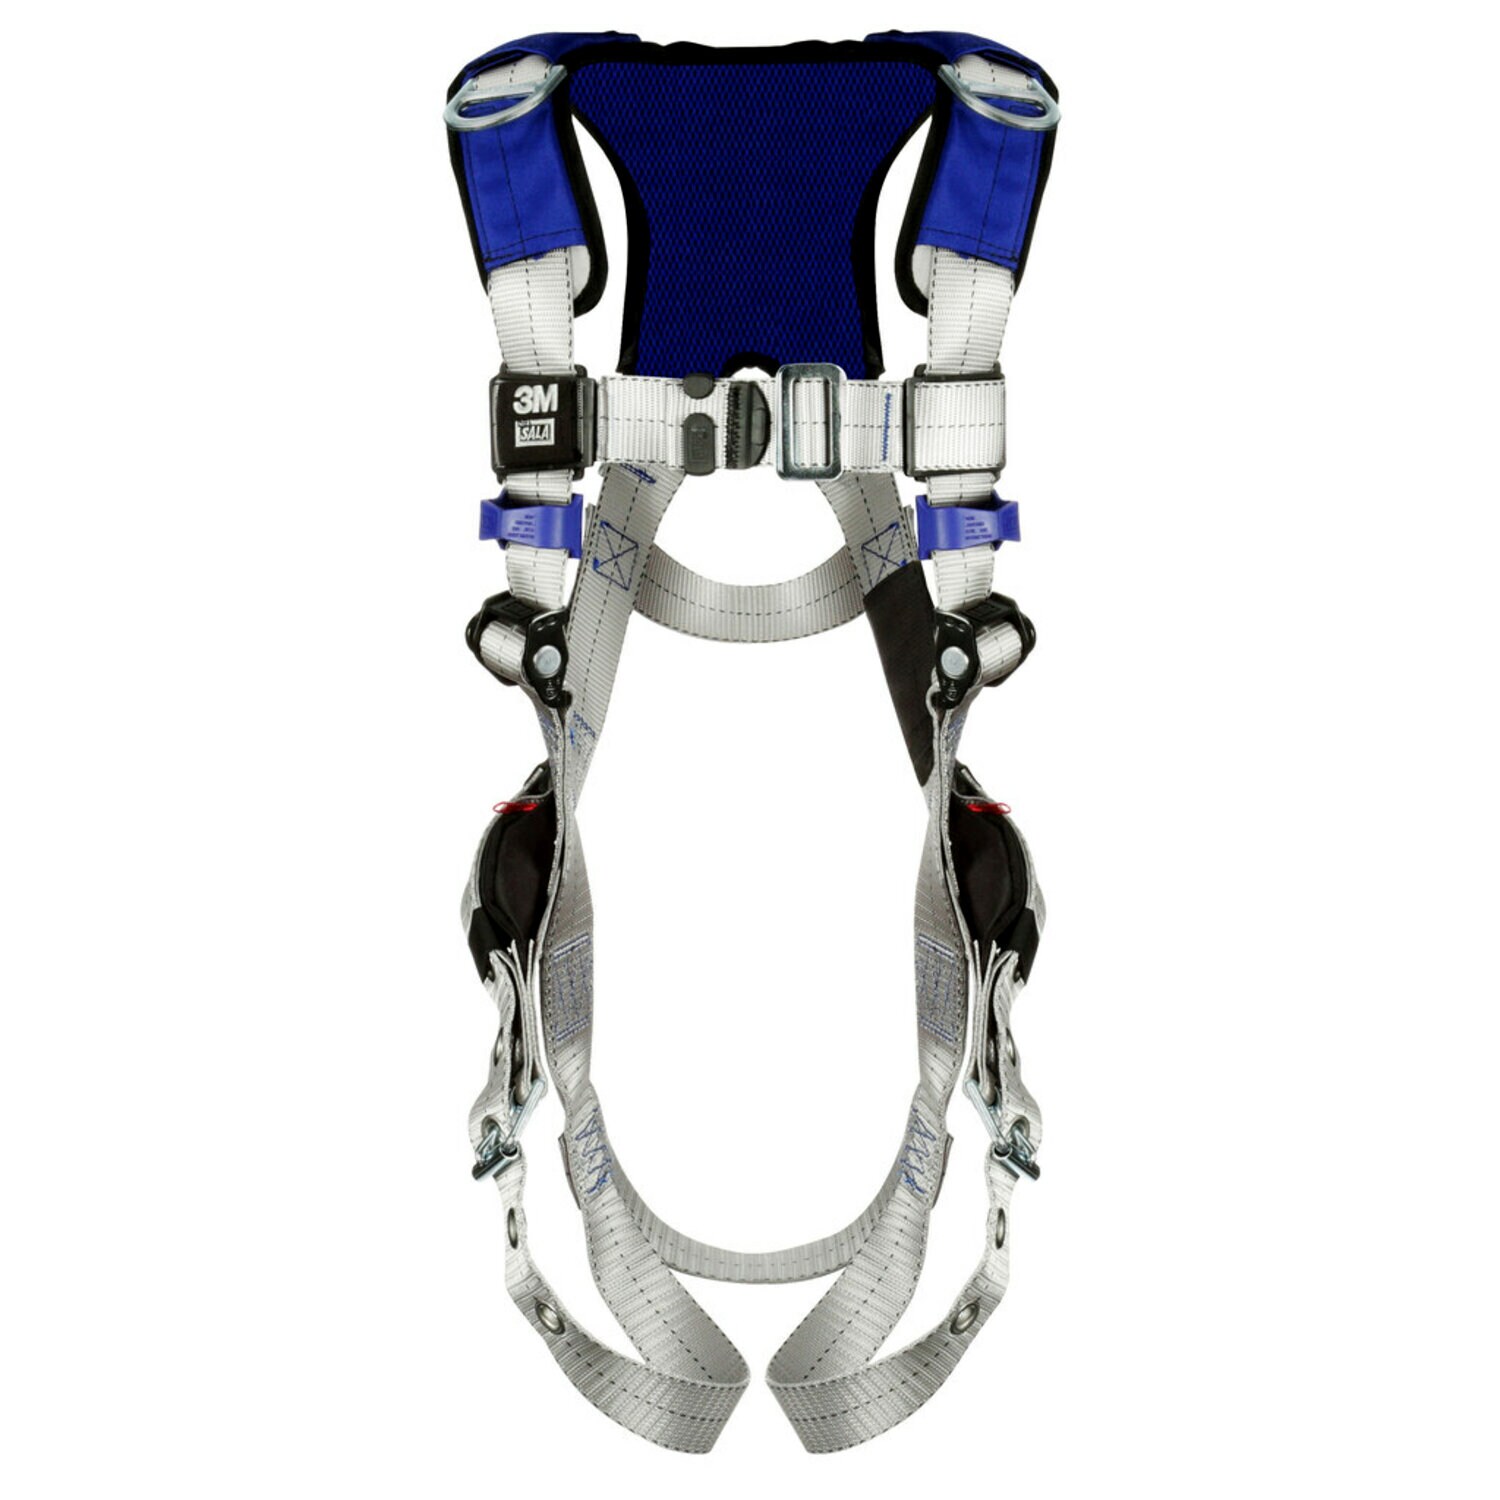 7012817636 - 3M DBI-SALA ExoFit X100 Comfort Tower Climbing Safety Harness 1401155, X-Small